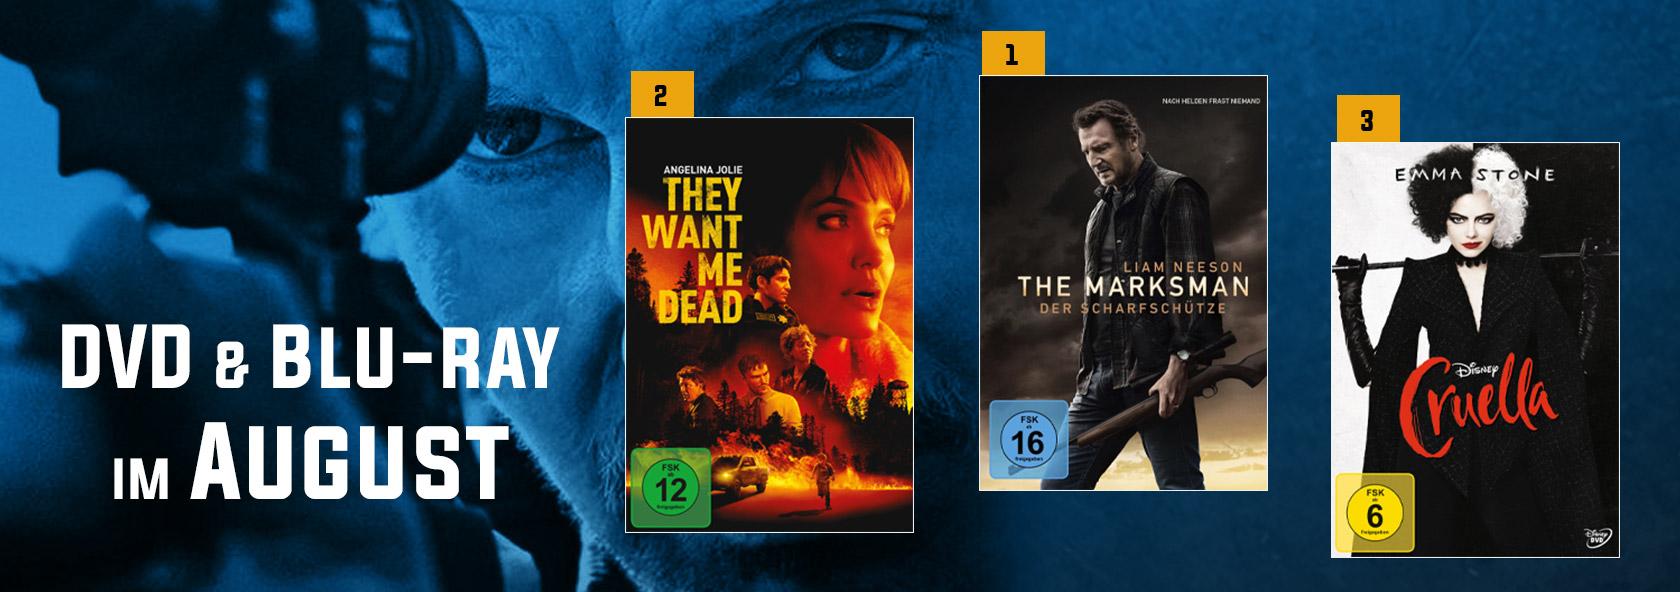 DVD & Blu-ray Charts 08-2021: Liam Neesons neuer Film siegt im August